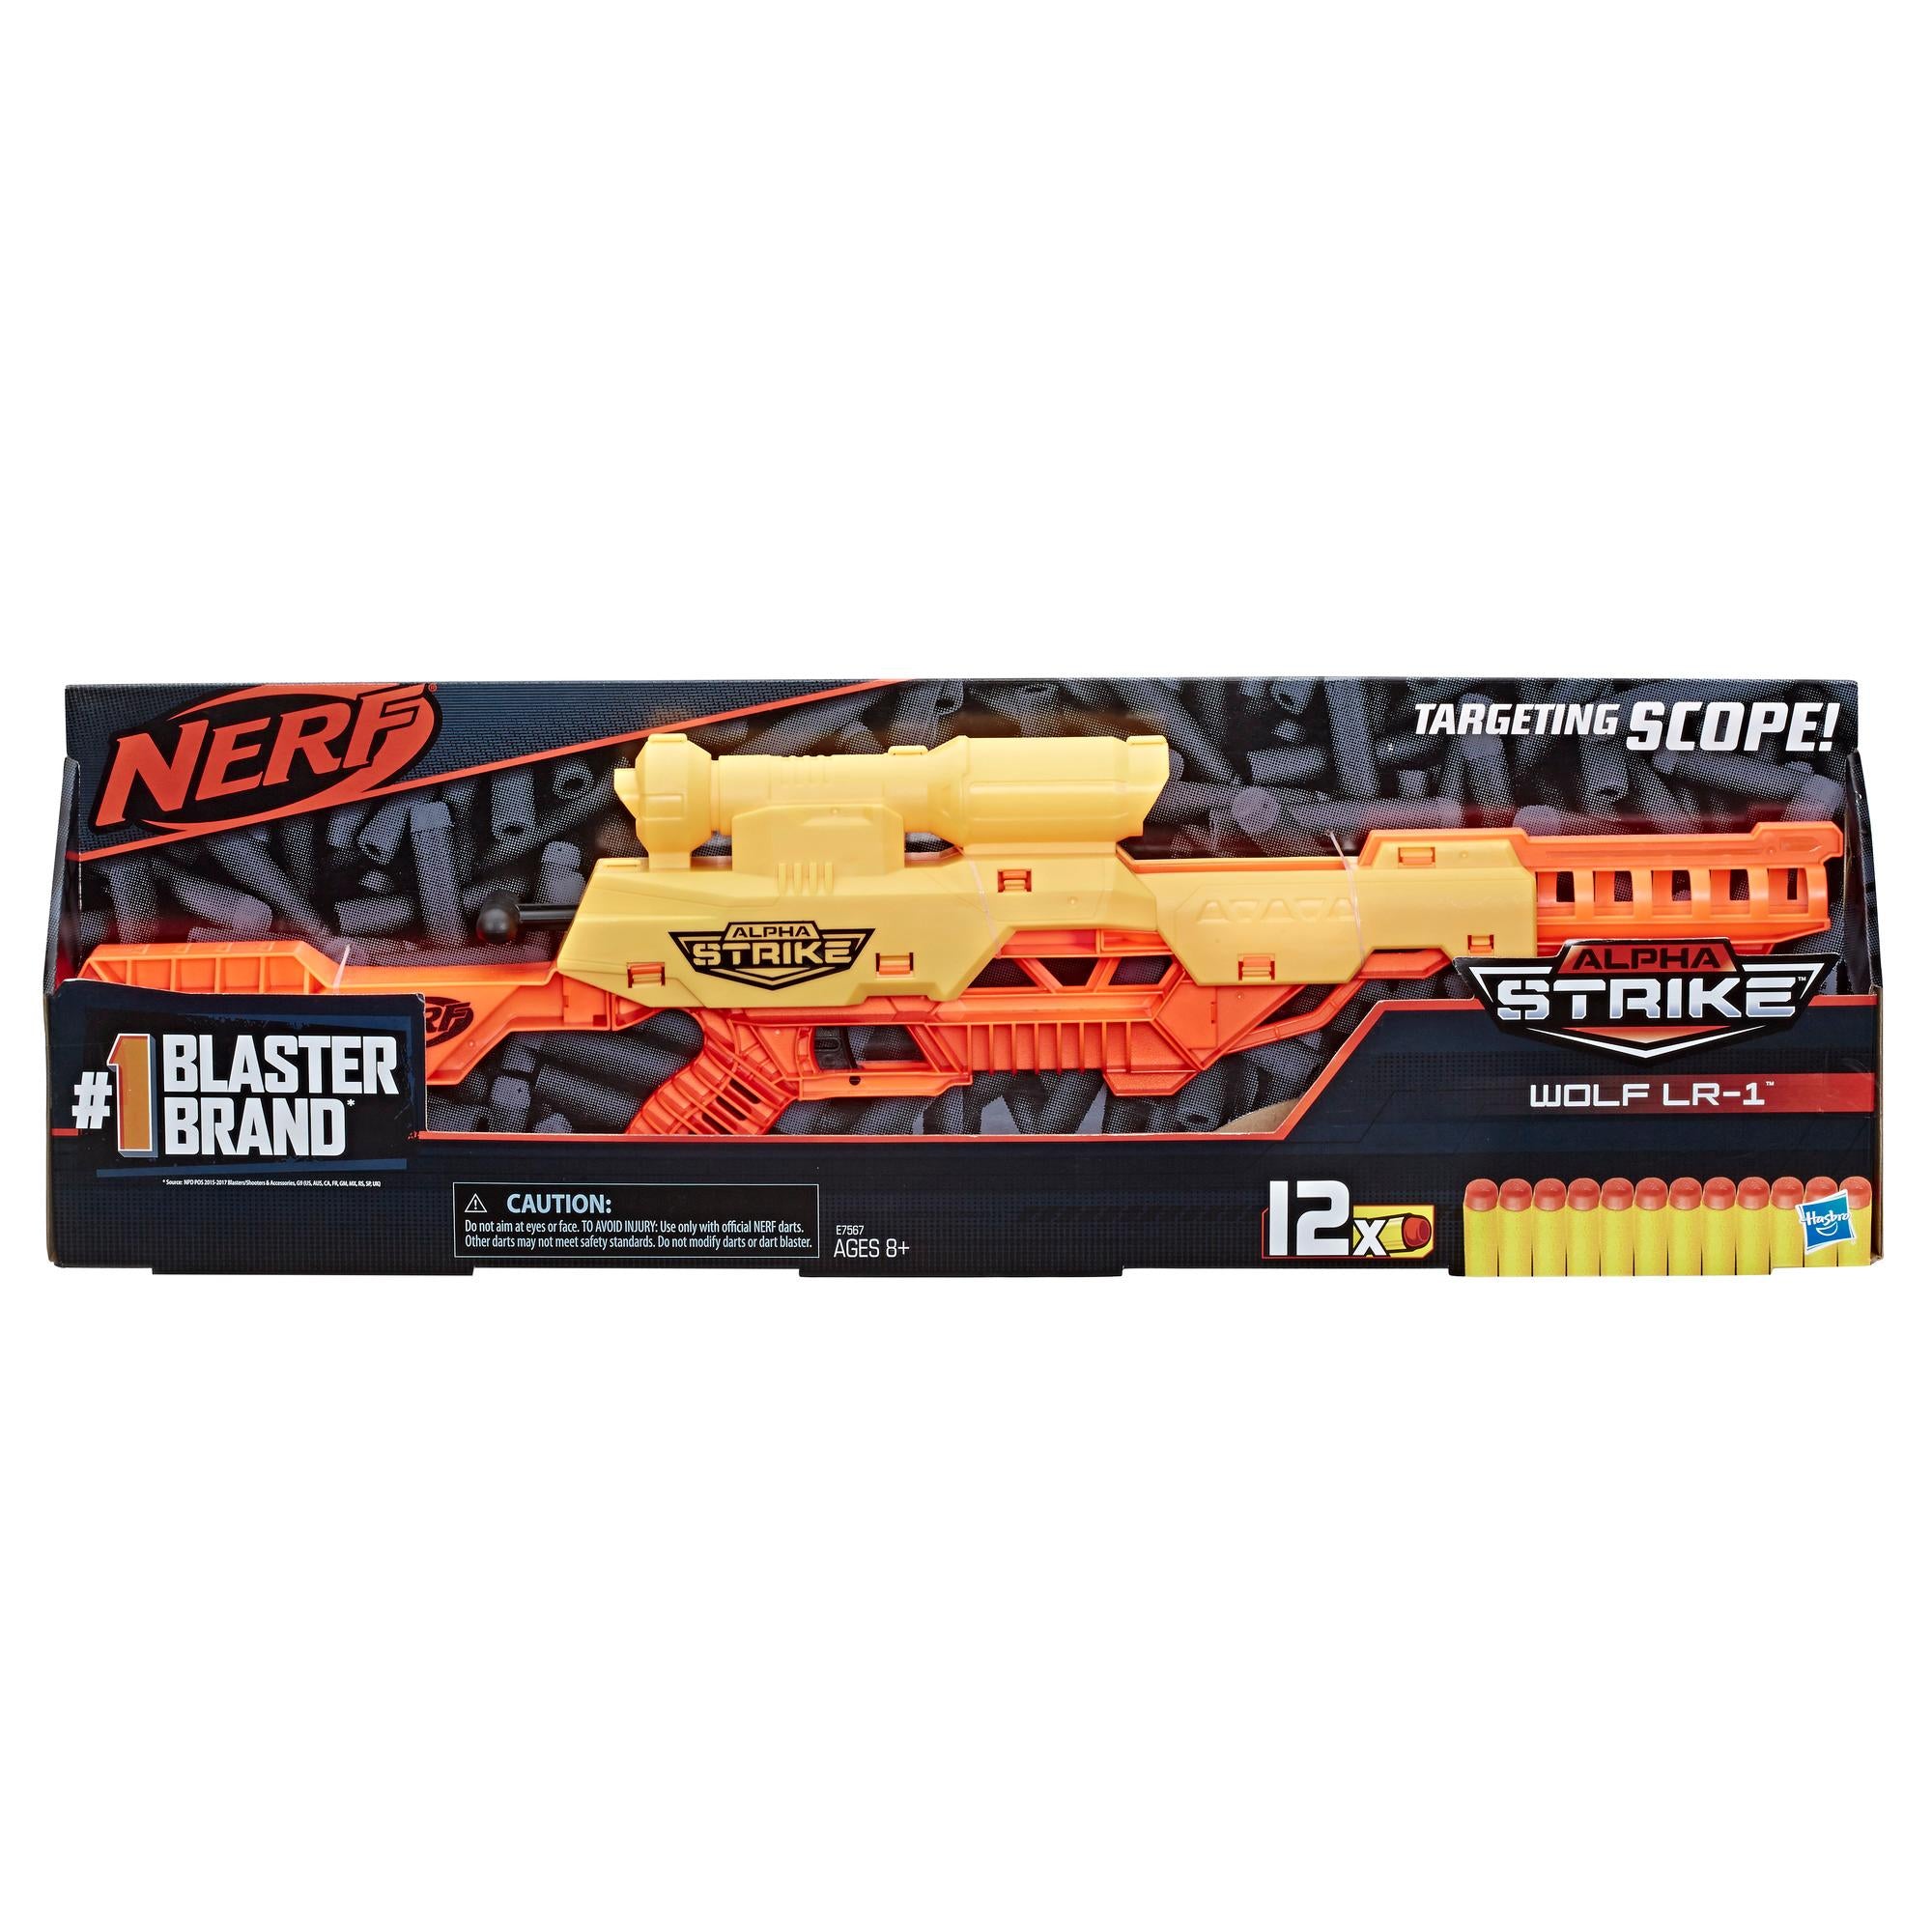 NERF Alpha Strike Wolf LR-1 Toy Blaster